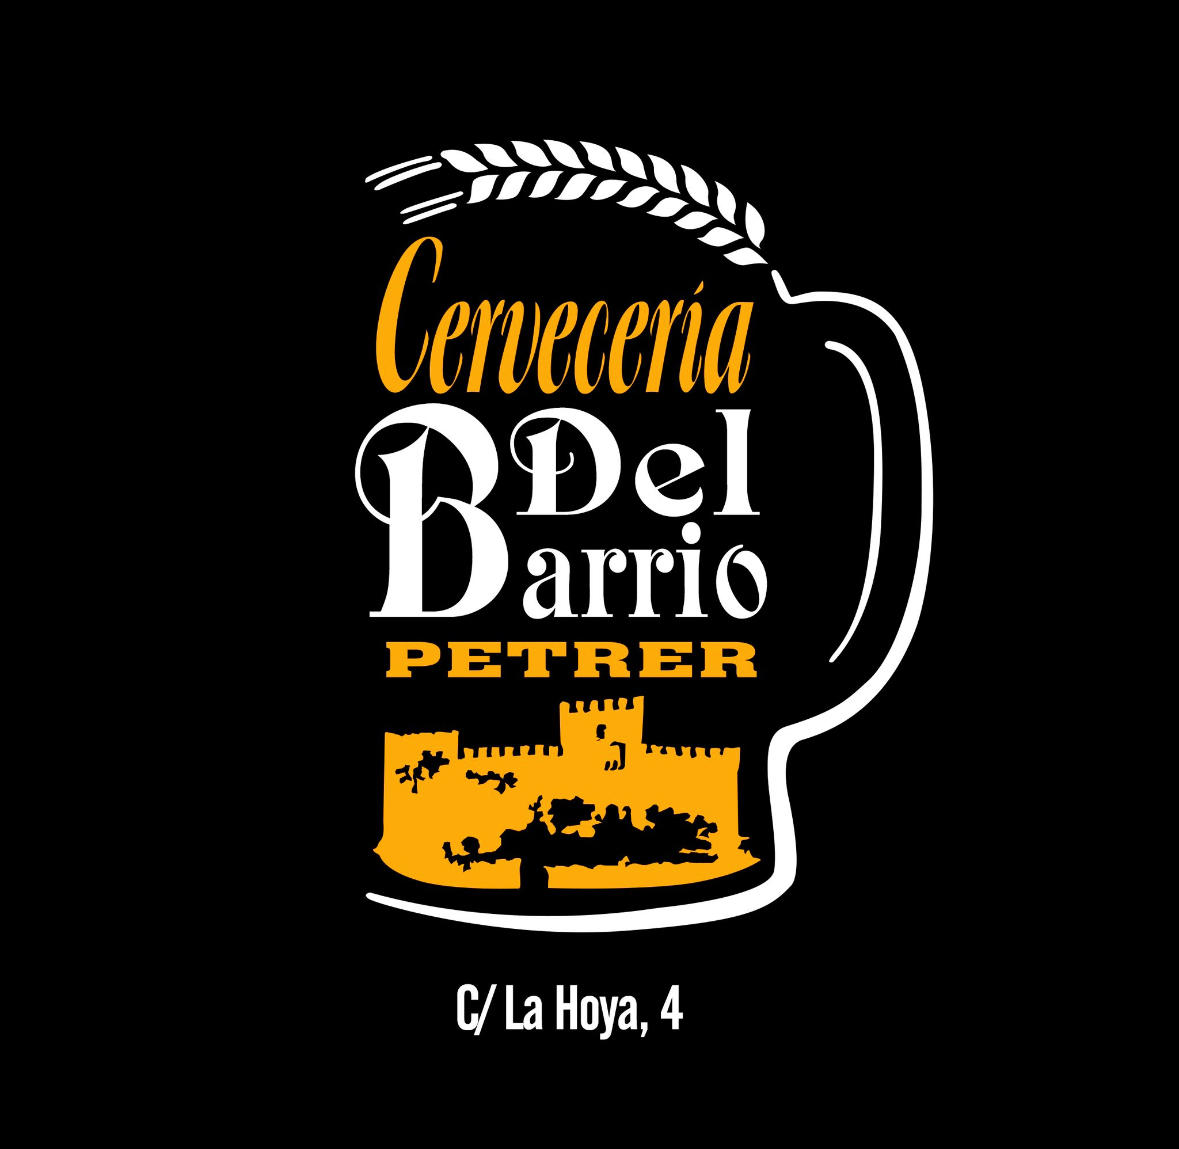 Images Cerveceria Del Barrio